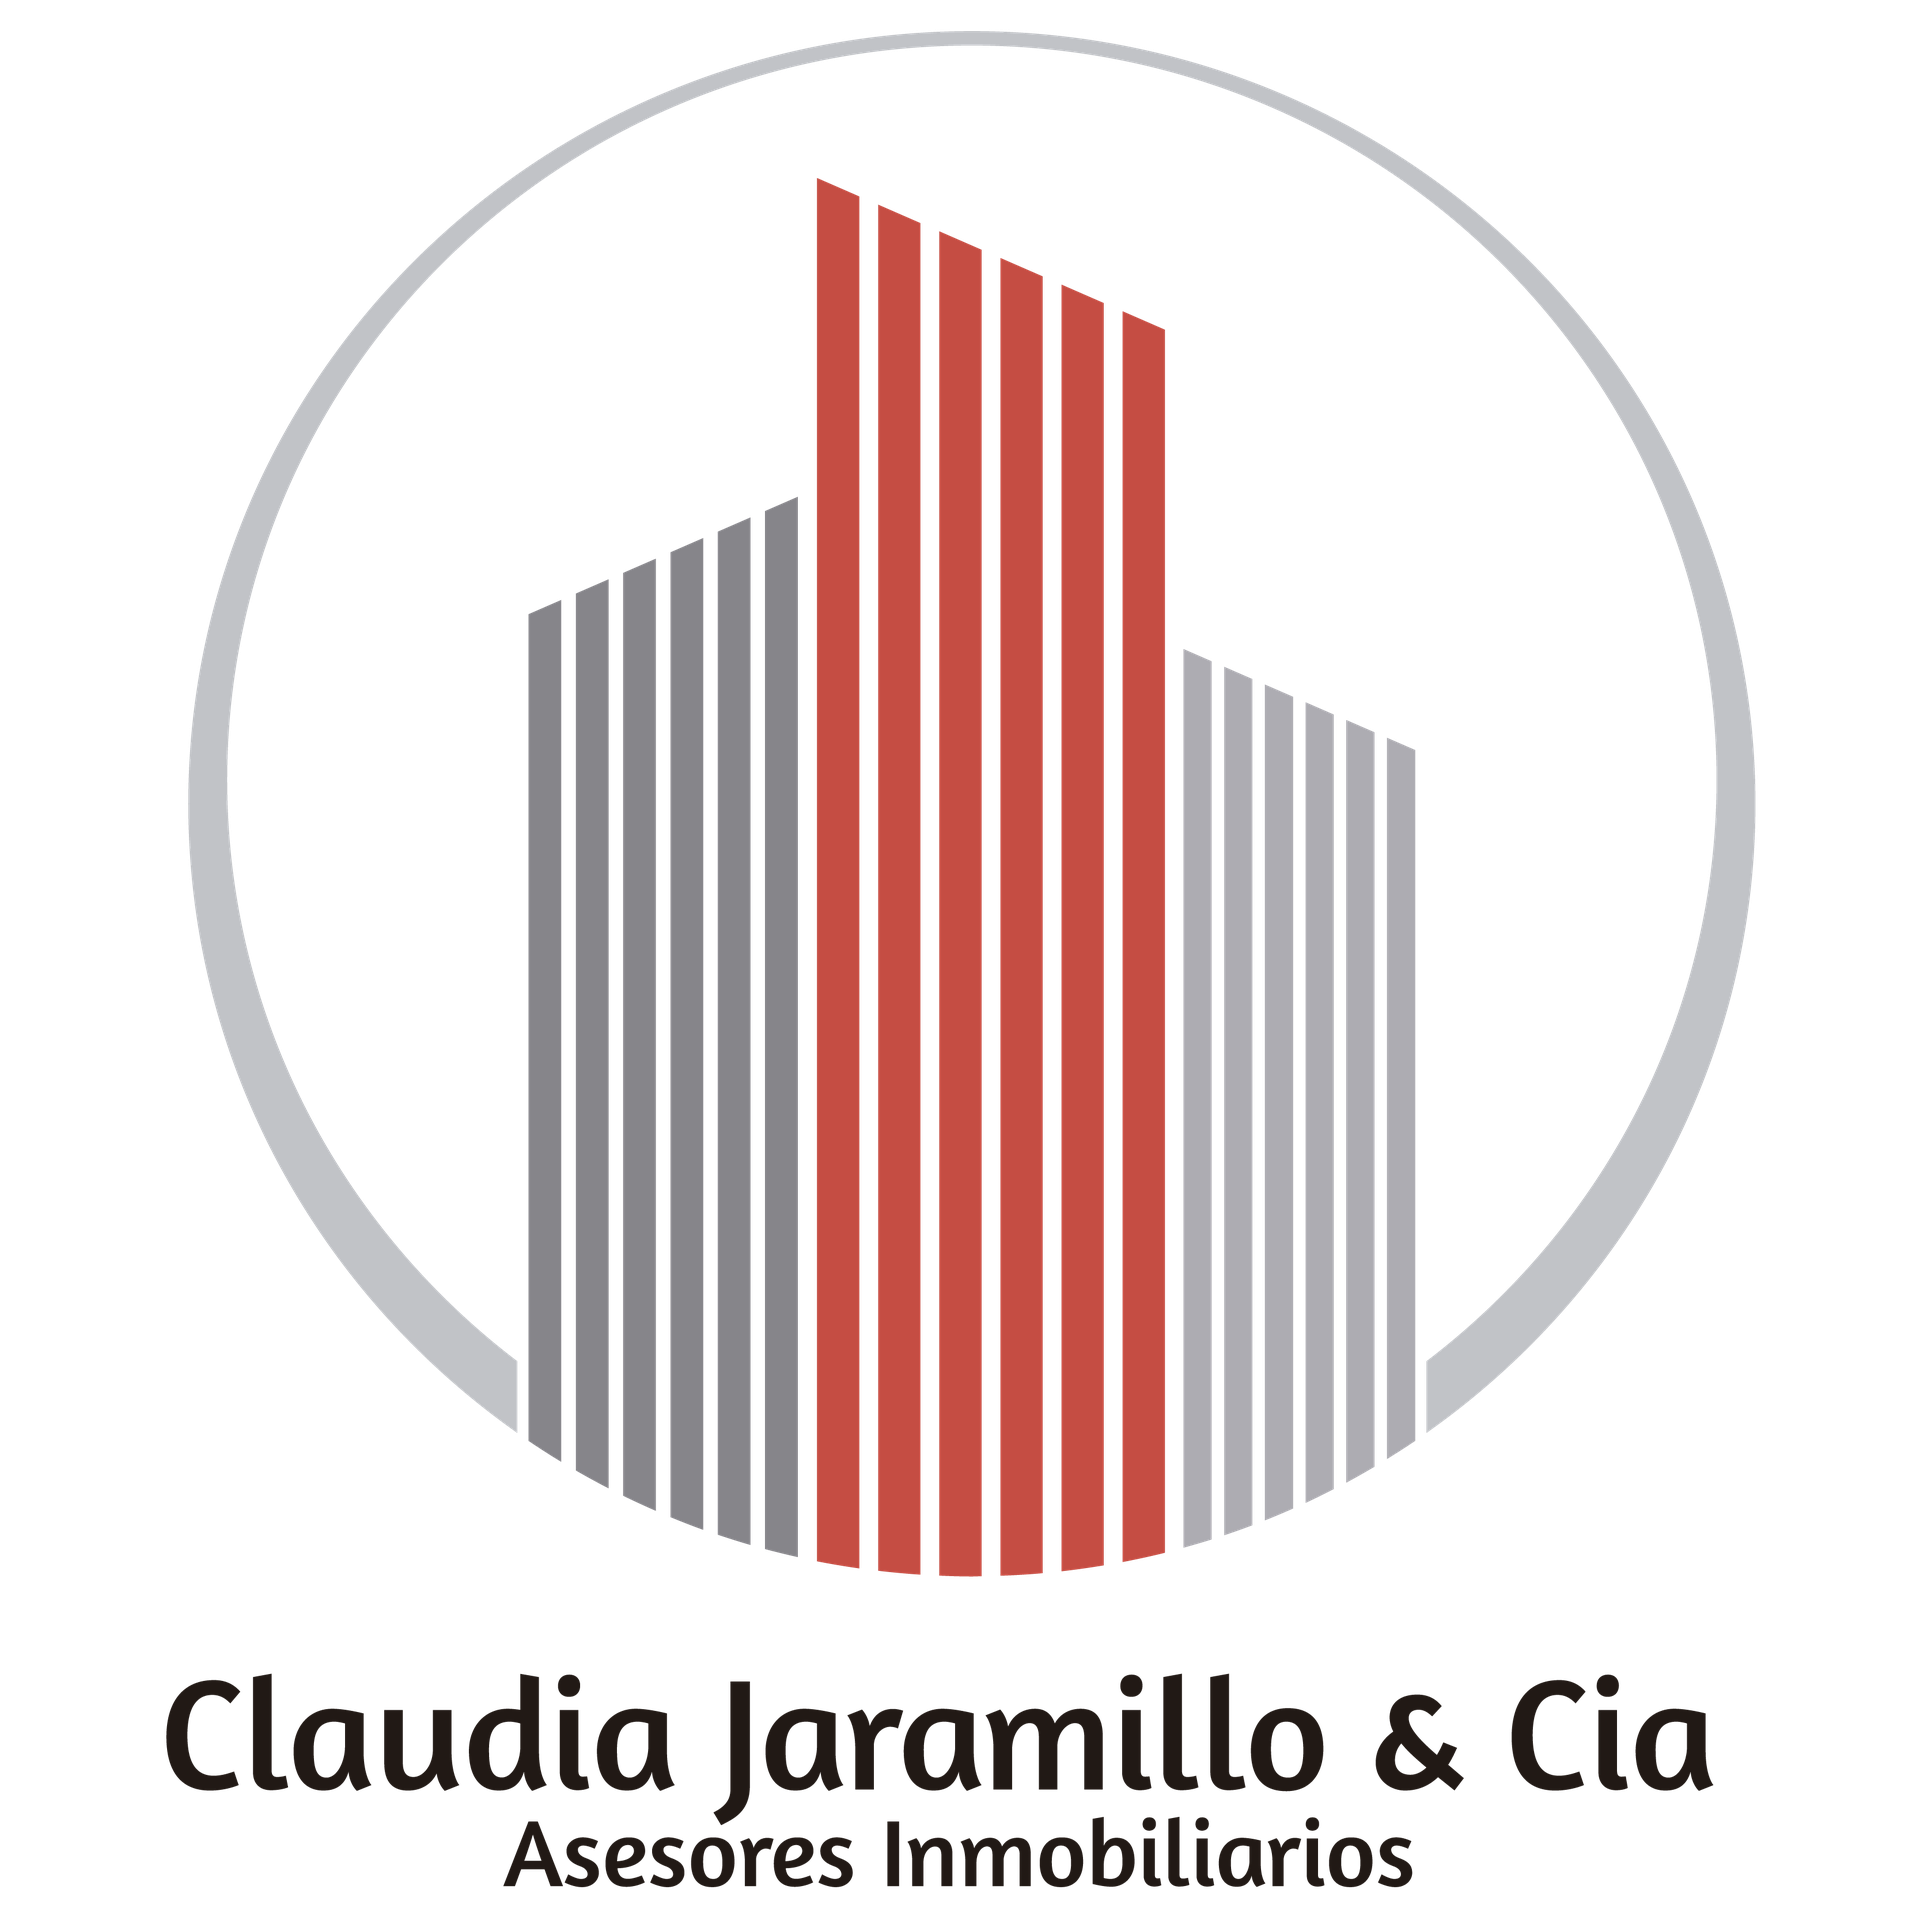 Claudia Jaramillo & Cia